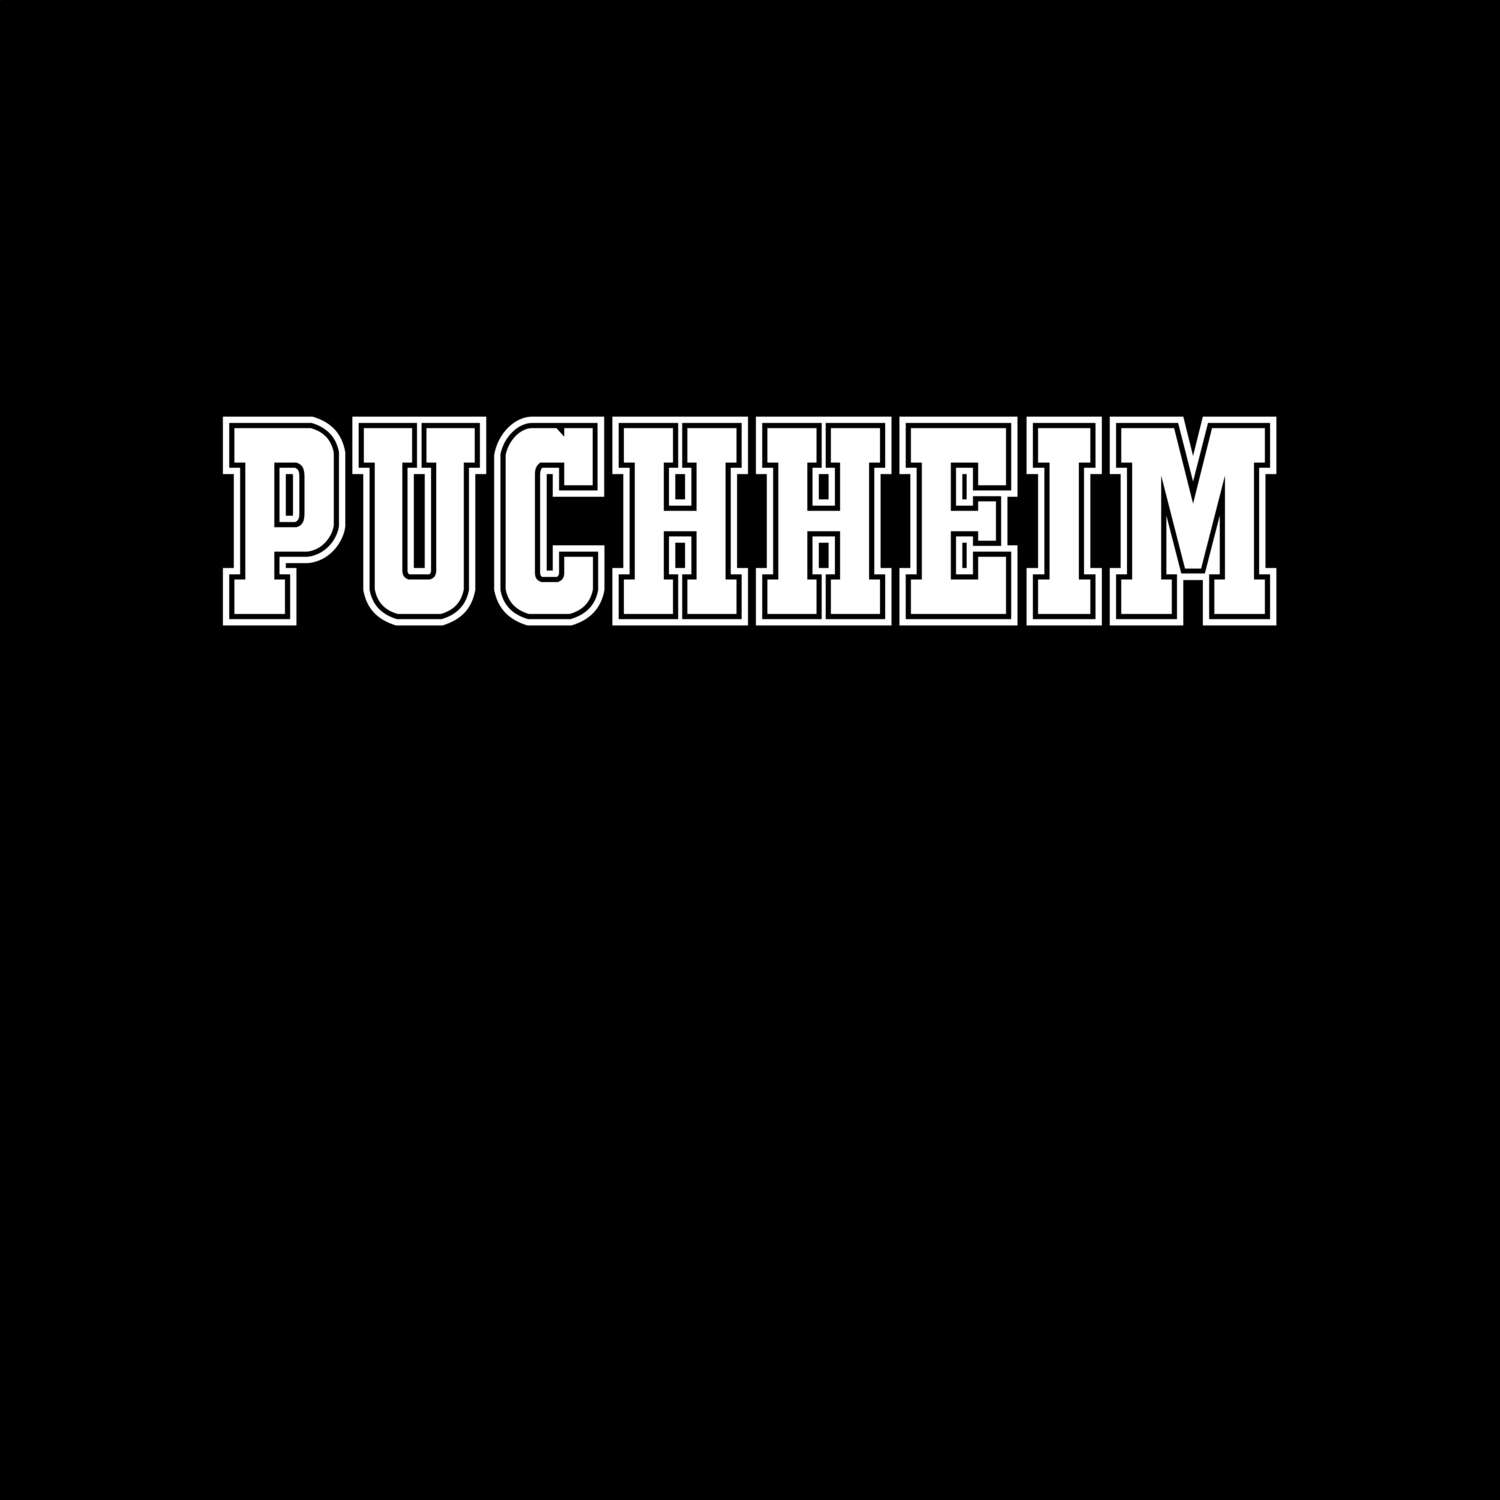 Puchheim T-Shirt »Classic«